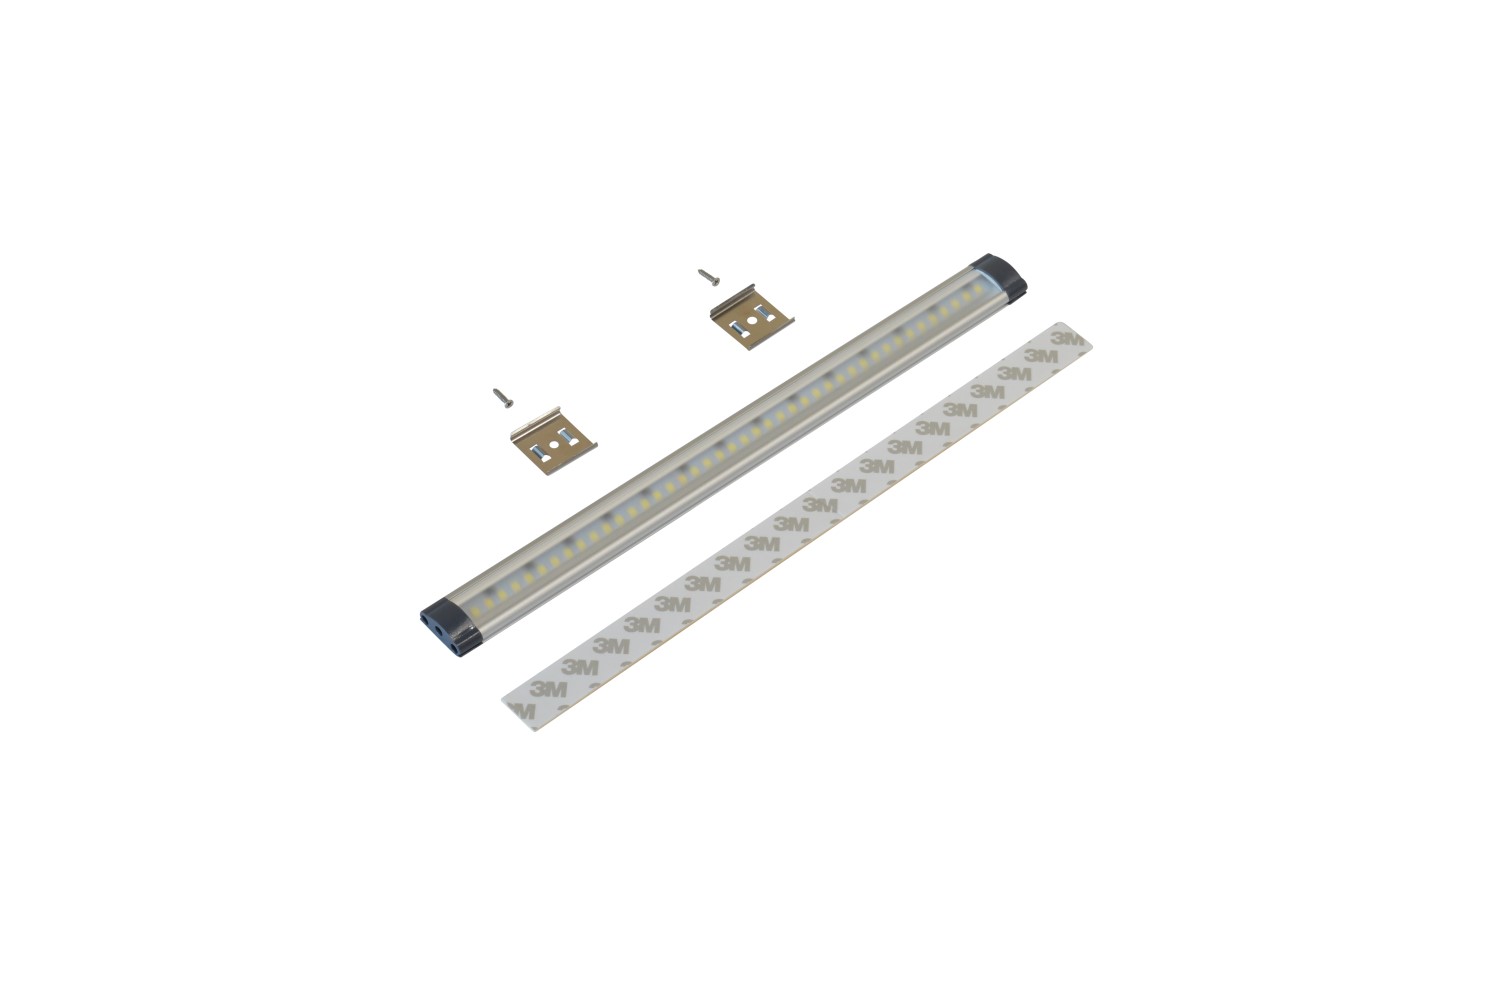 Laadruimte verlichting LED strip 30 cm